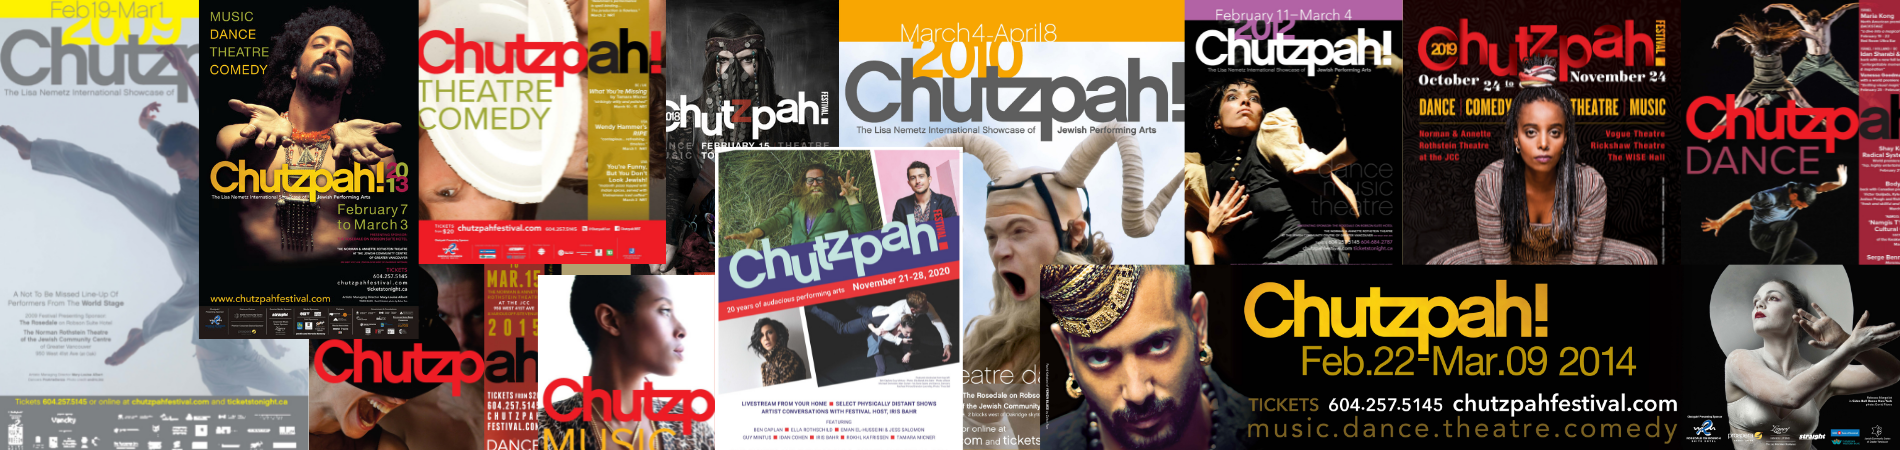 Chutzpah! Festival - Events